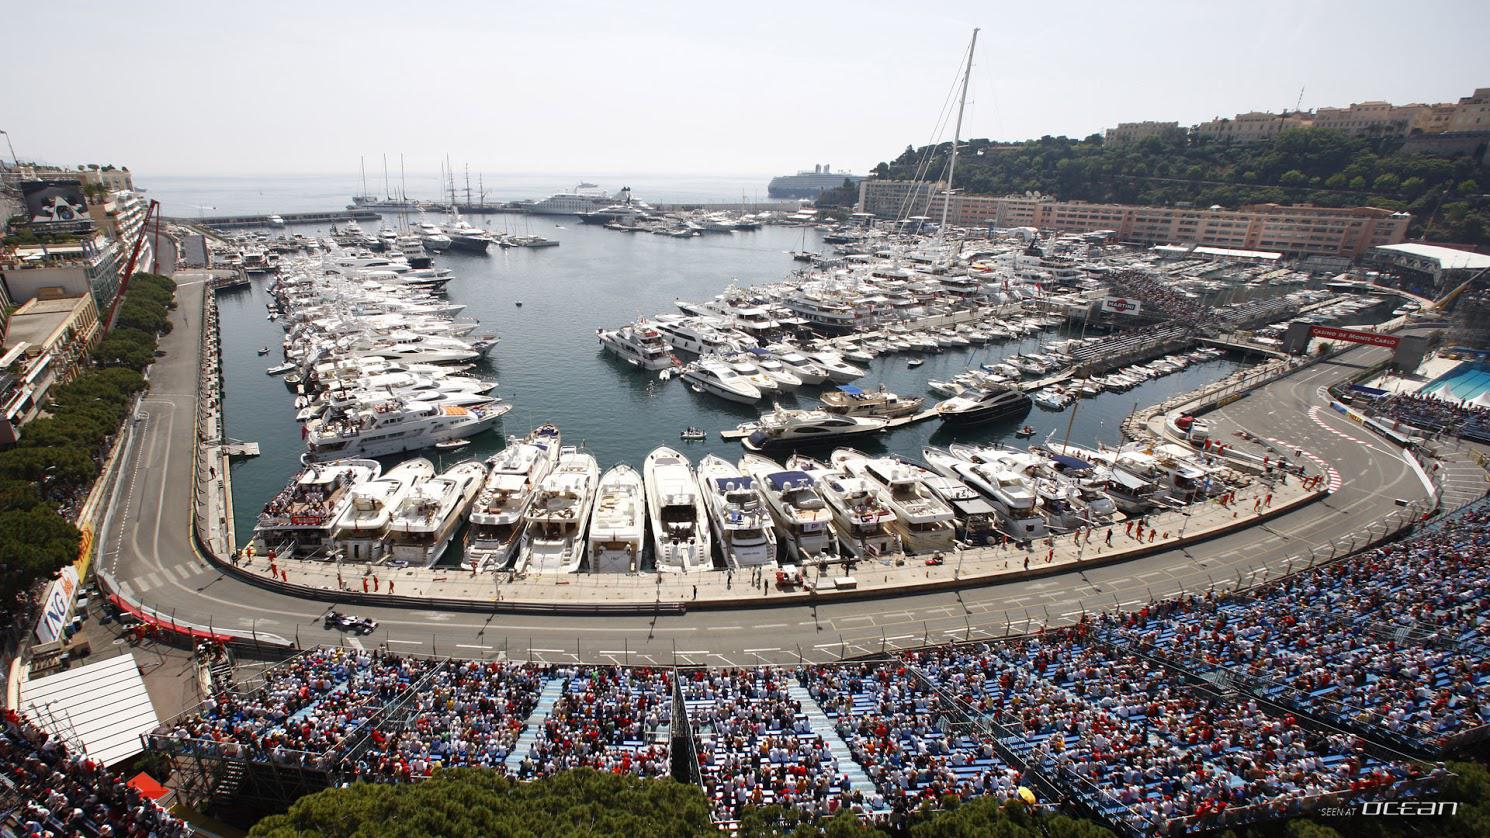 F1 Grand Prix Yacht Charter